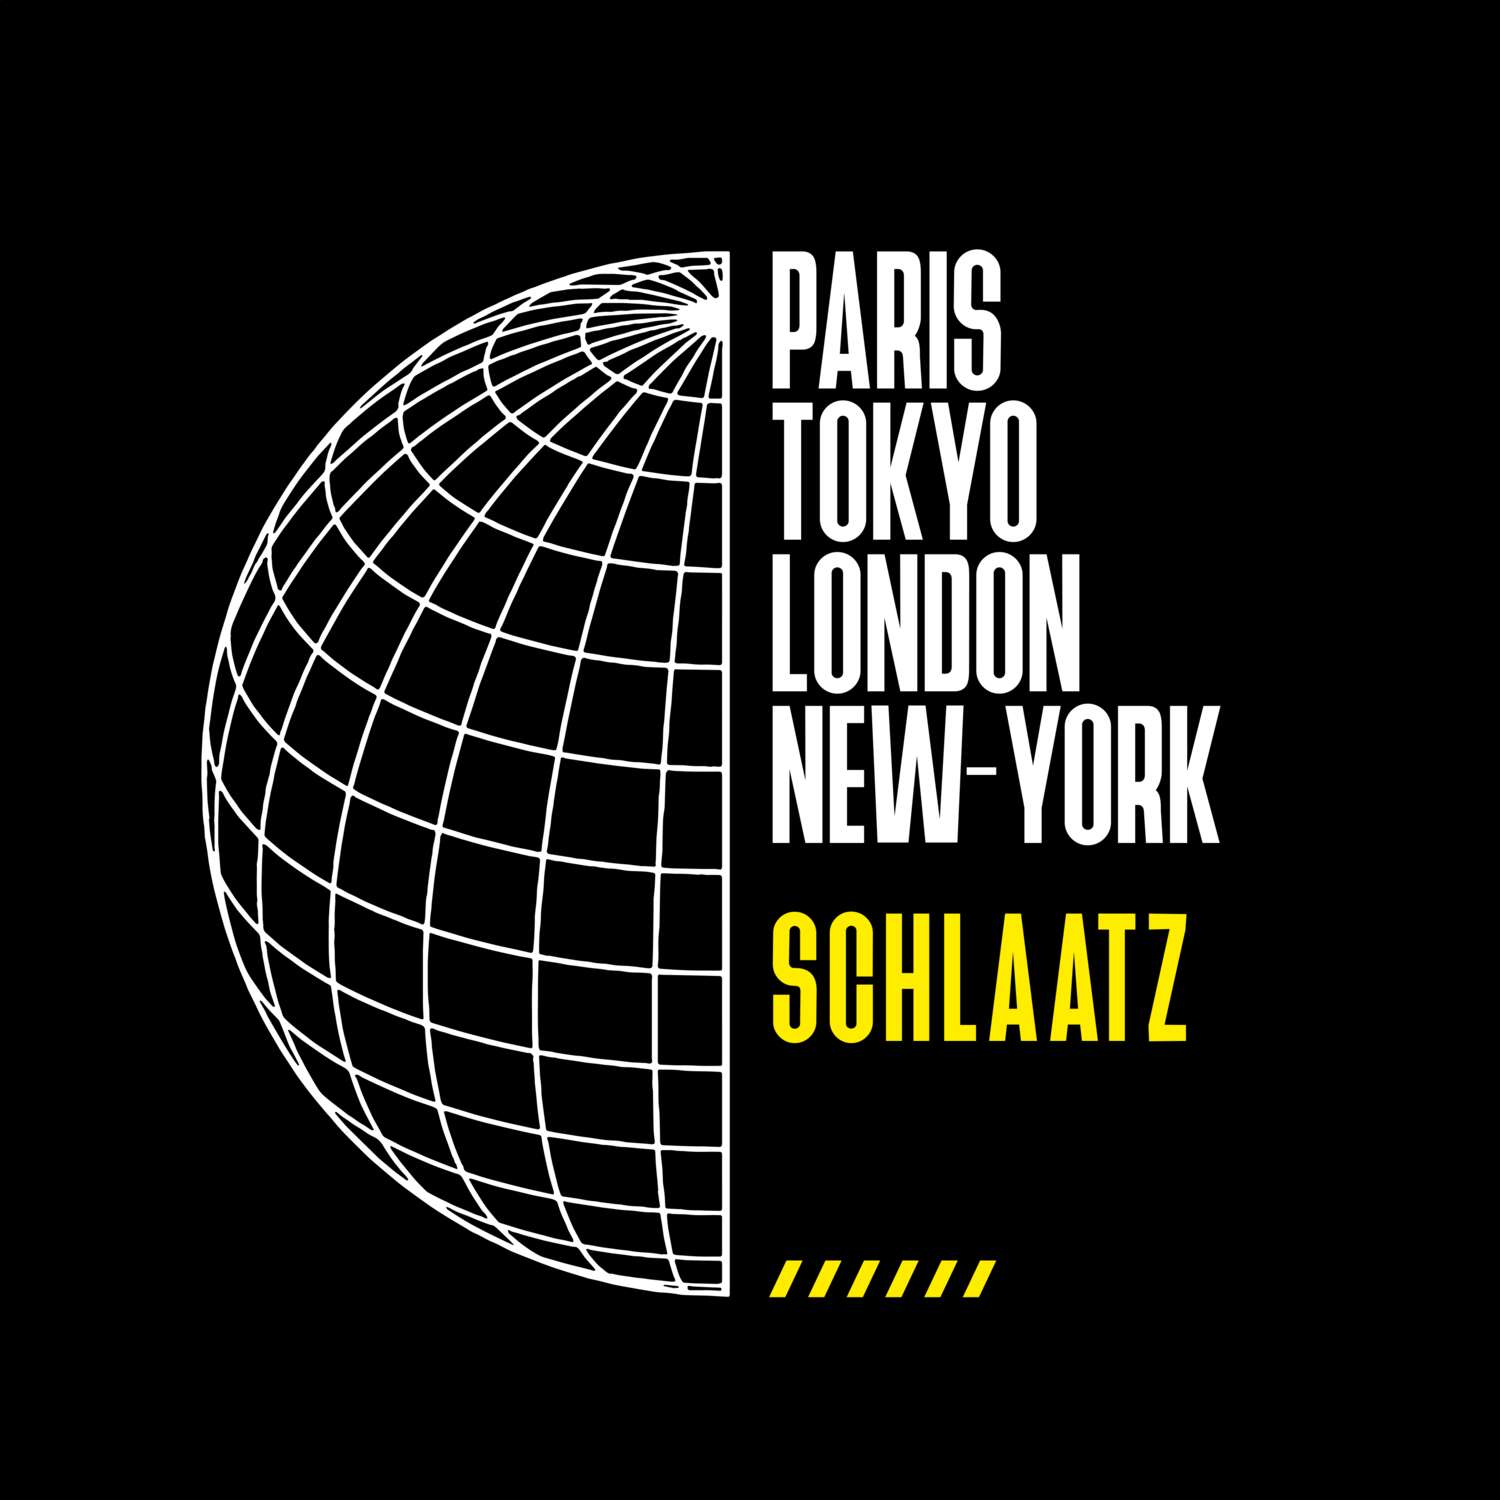 Schlaatz T-Shirt »Paris Tokyo London«